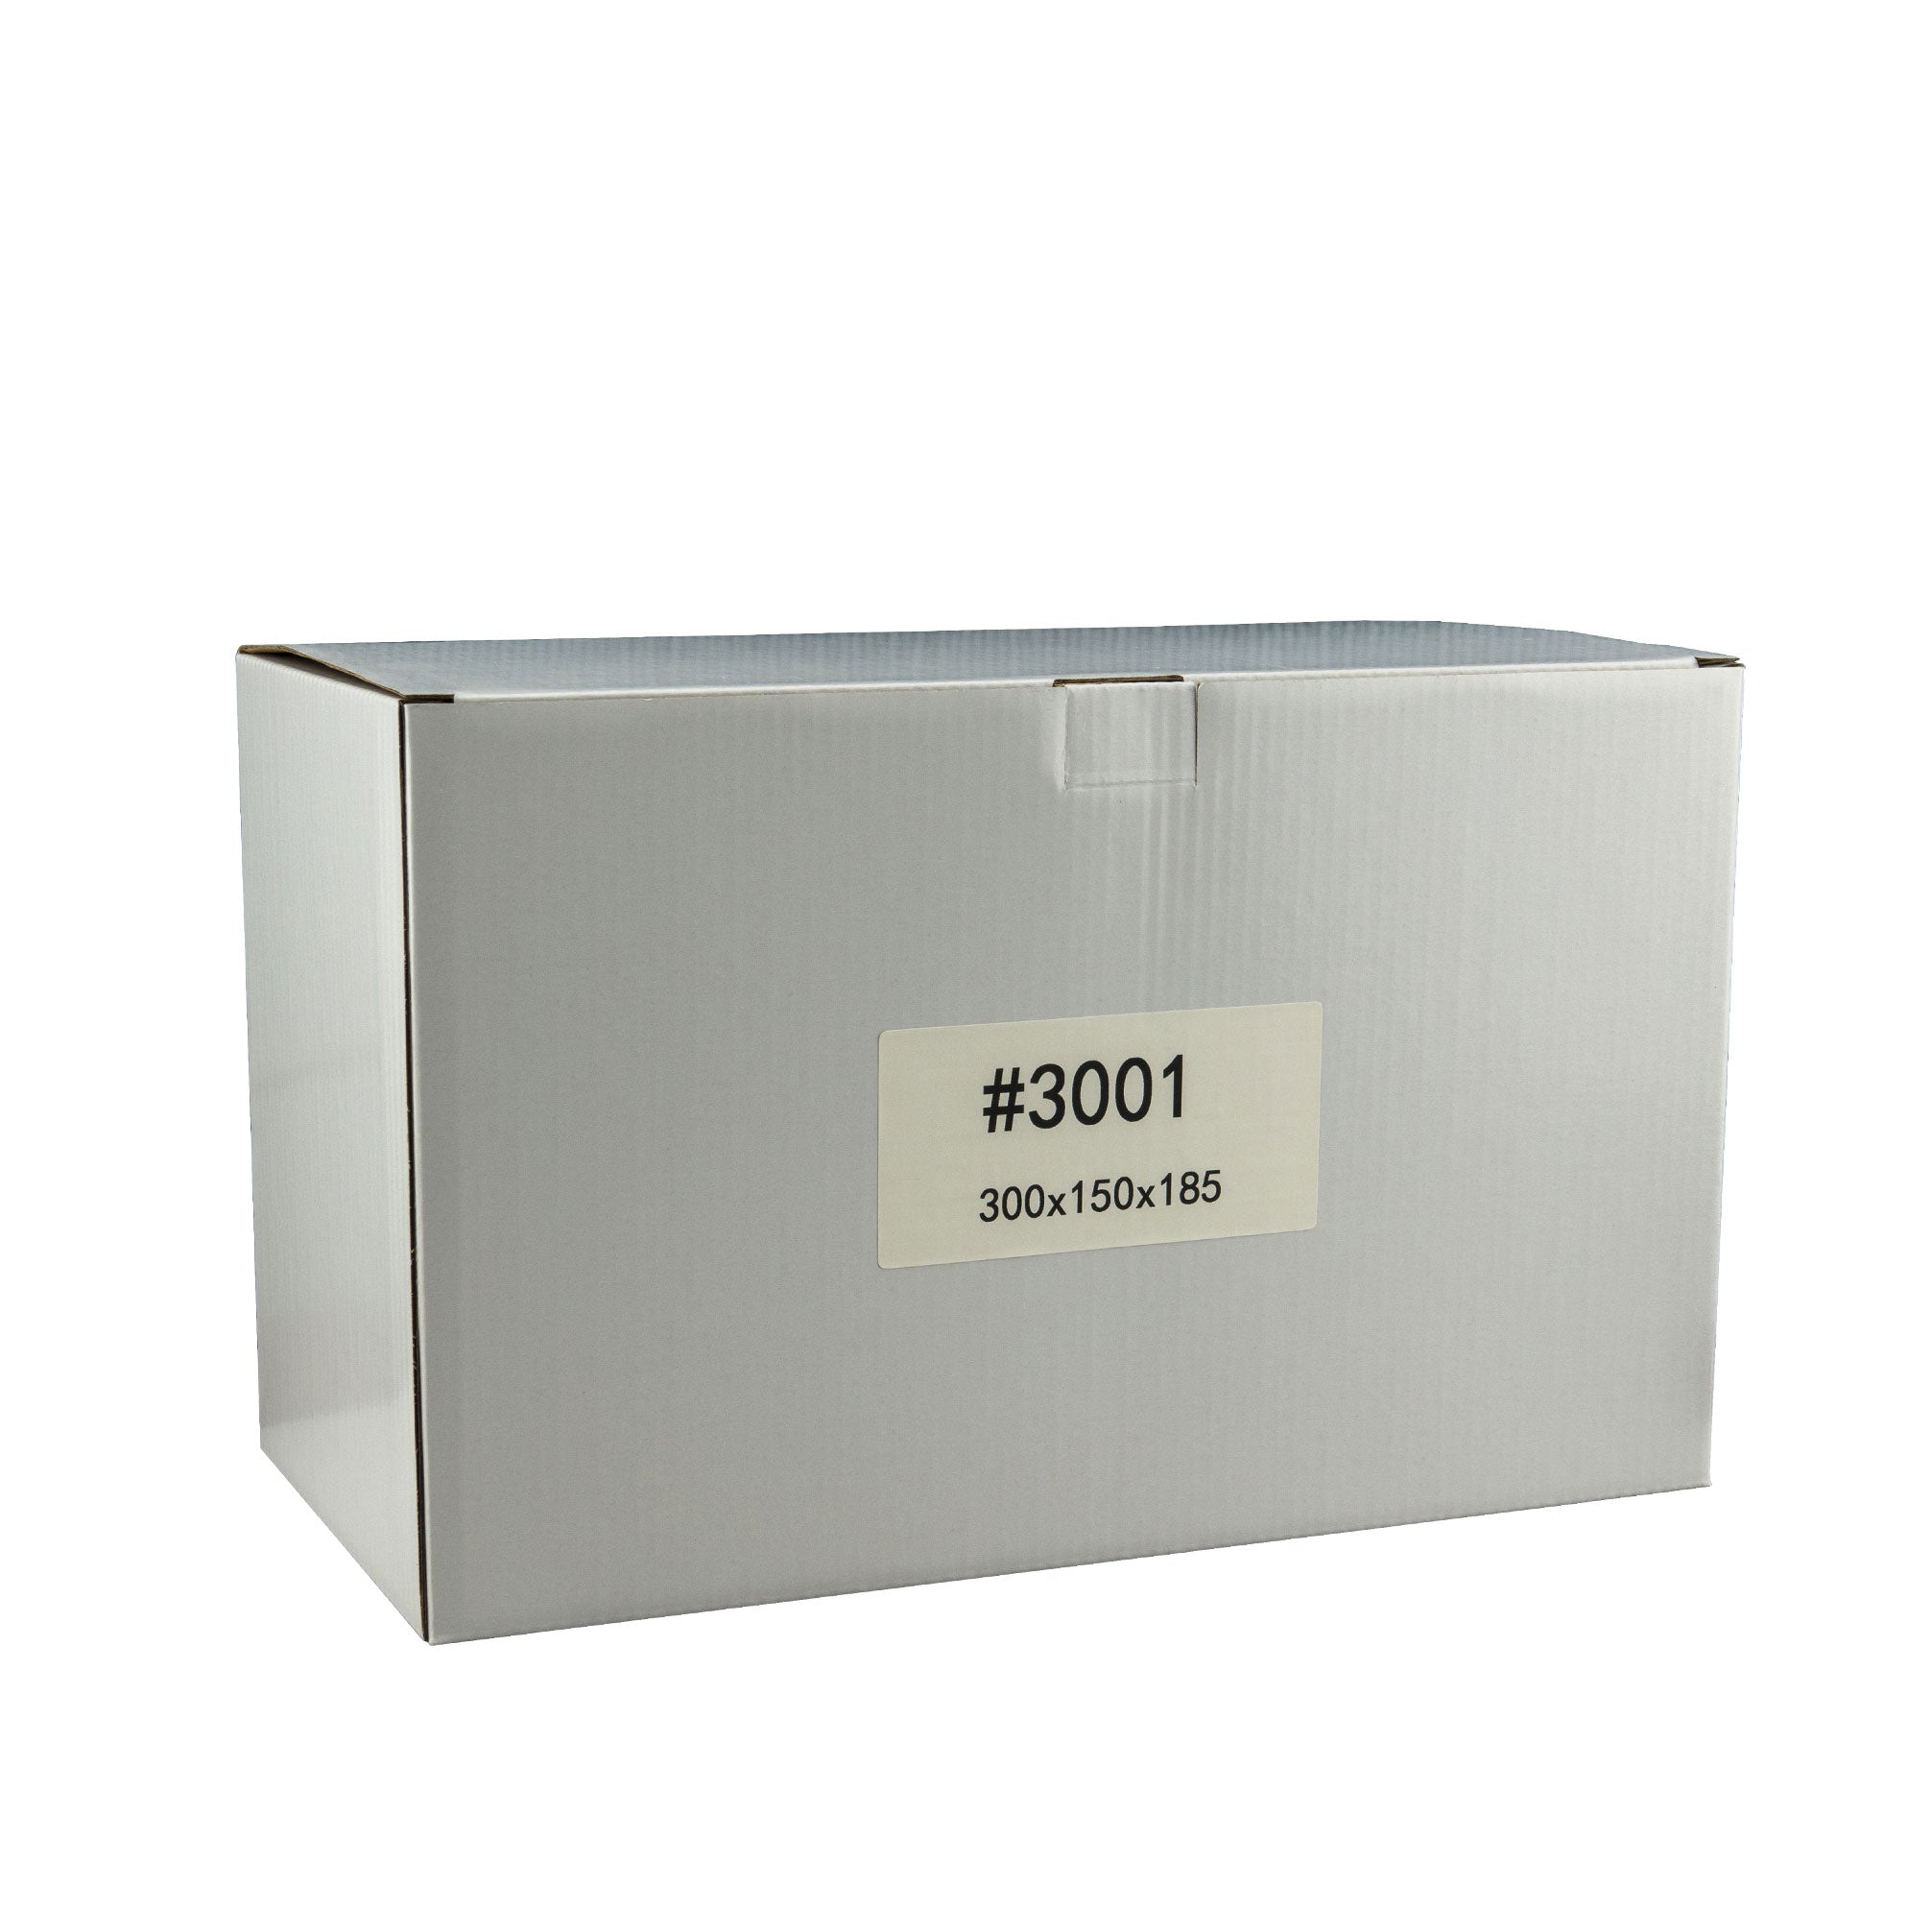 300mm x 150mm x 185mm White Carton Cardboard Shipping Box (#3001)